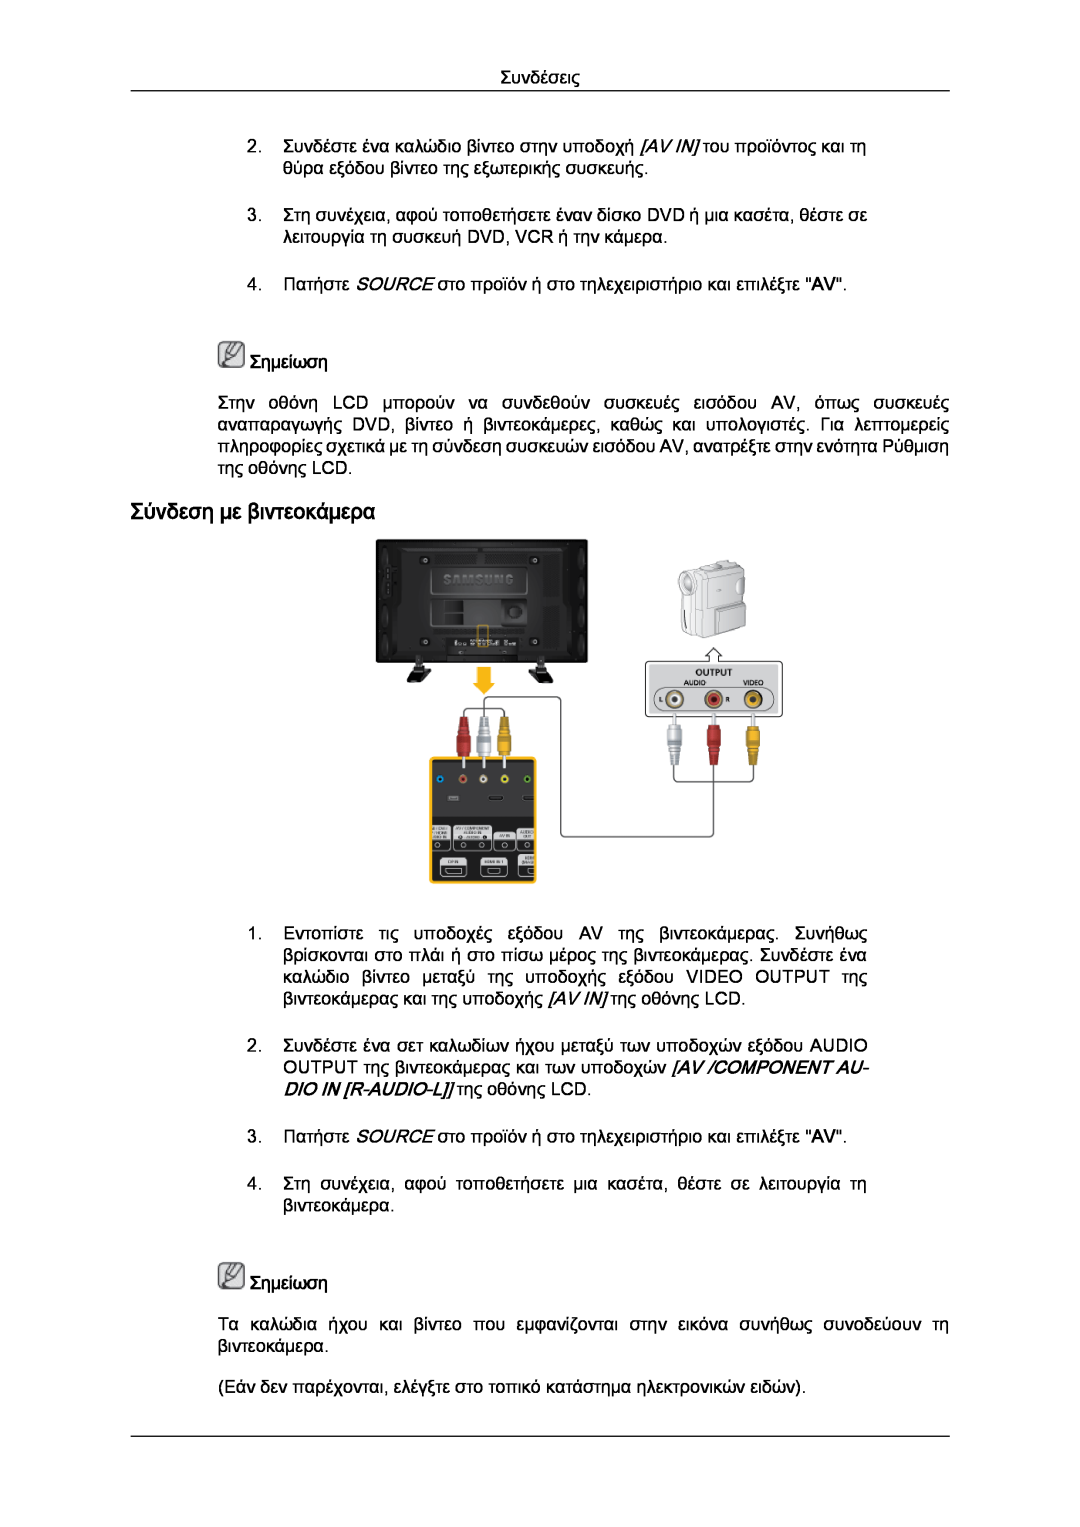 Samsung LH40GWSLBC/EN, LH40GWTLBC/EN, LH46GWPLBC/EN, LH40GWPLBC/EN, LH46GWSLBC/EN manual Σύνδεση με βιντεοκάμερα, Σημείωση 